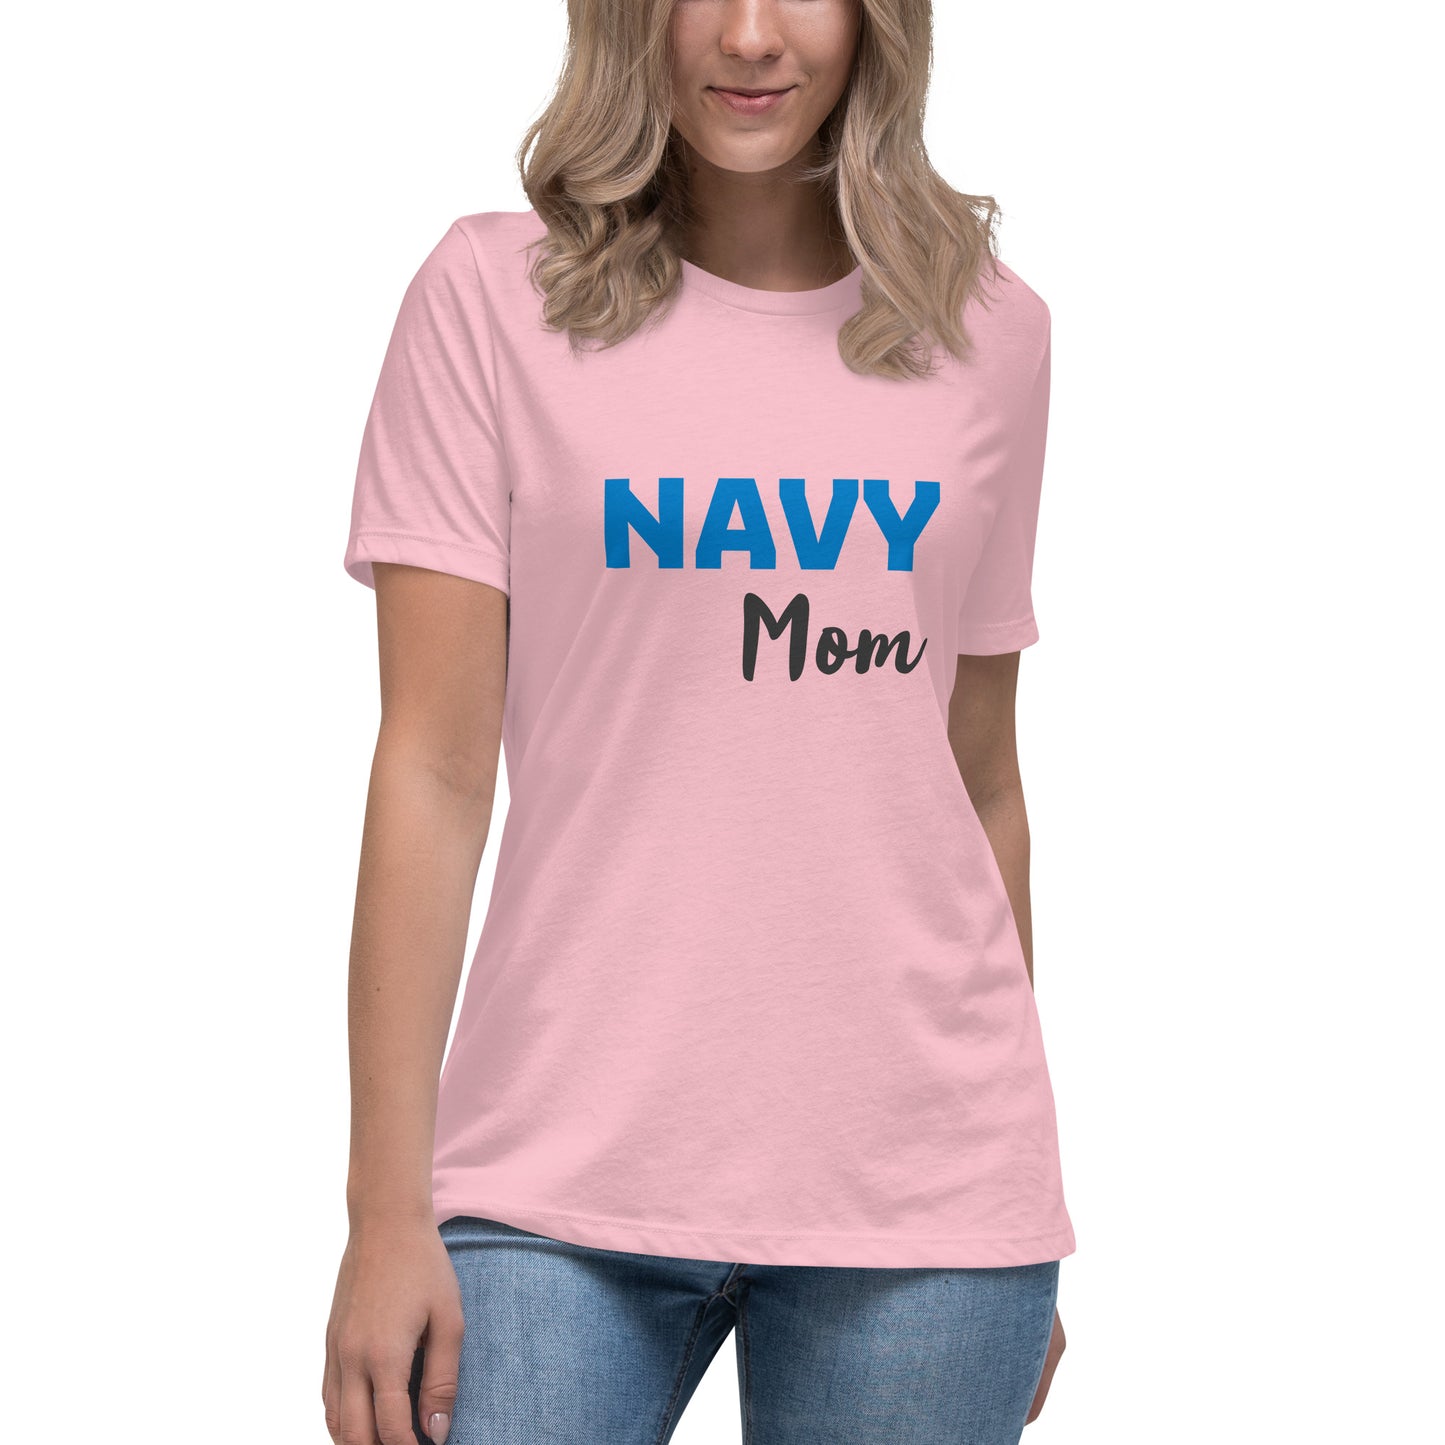 Navy Mom Printed T-Shirt